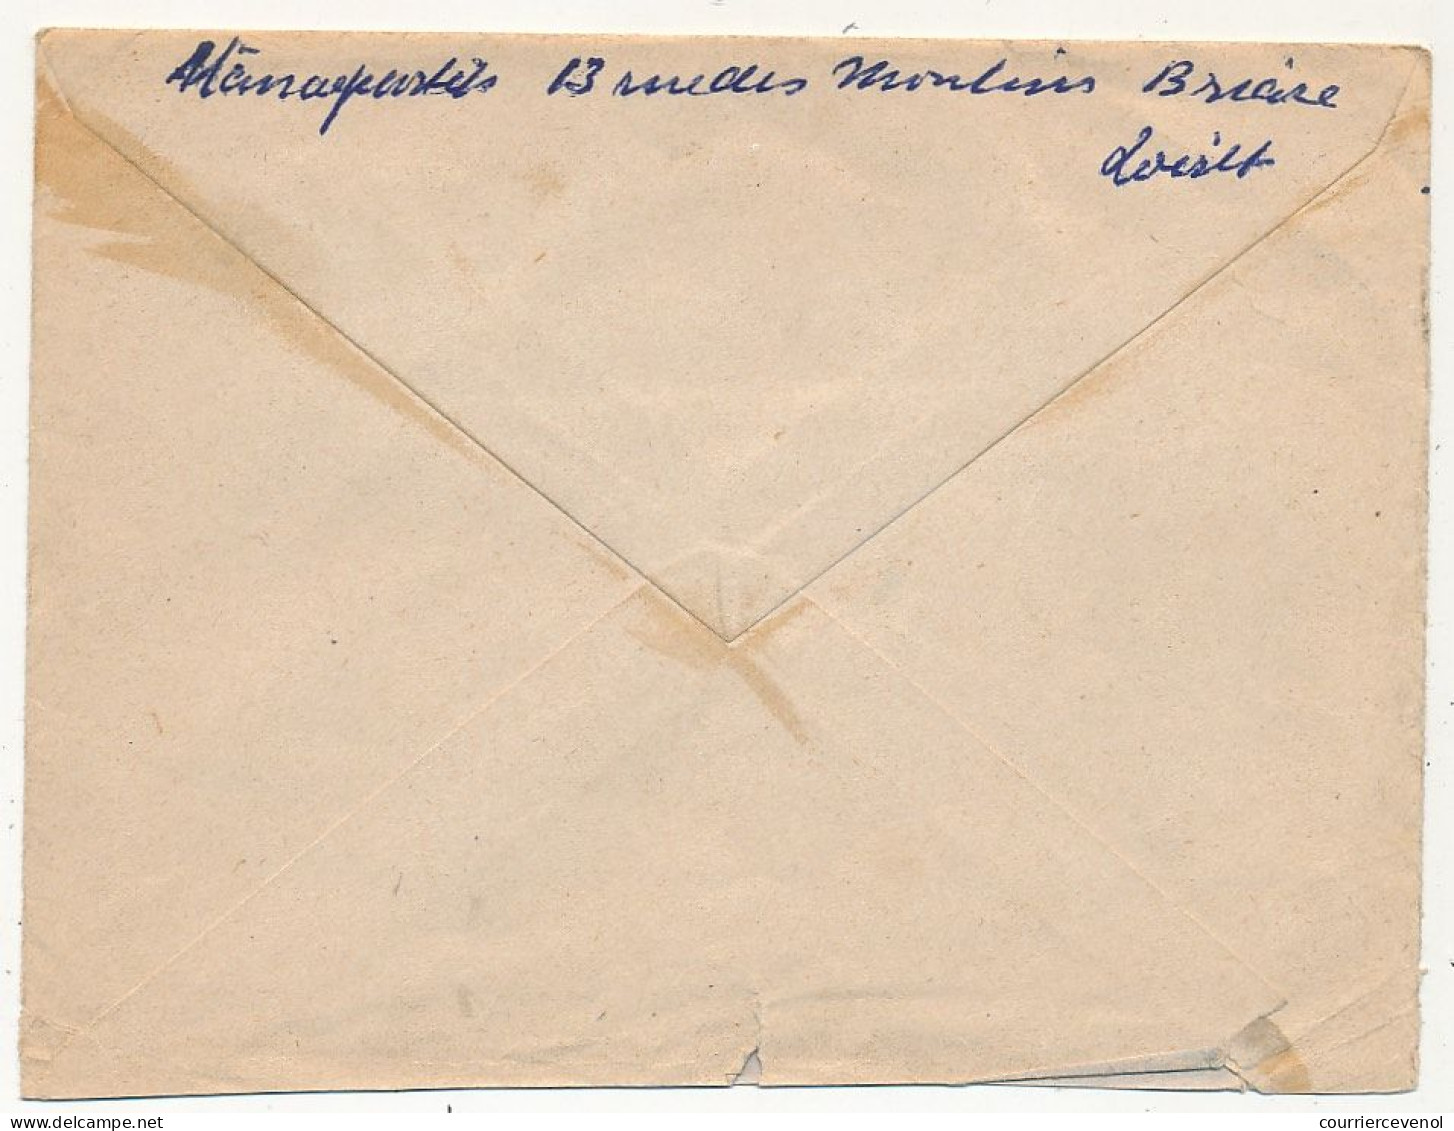 FRANCE - Env. Affr Composé 4F Bugeaud X", 2F + 3F Fournier, 1F Marianne Obl 1952 Briare - Usage Tardif - Briefe U. Dokumente